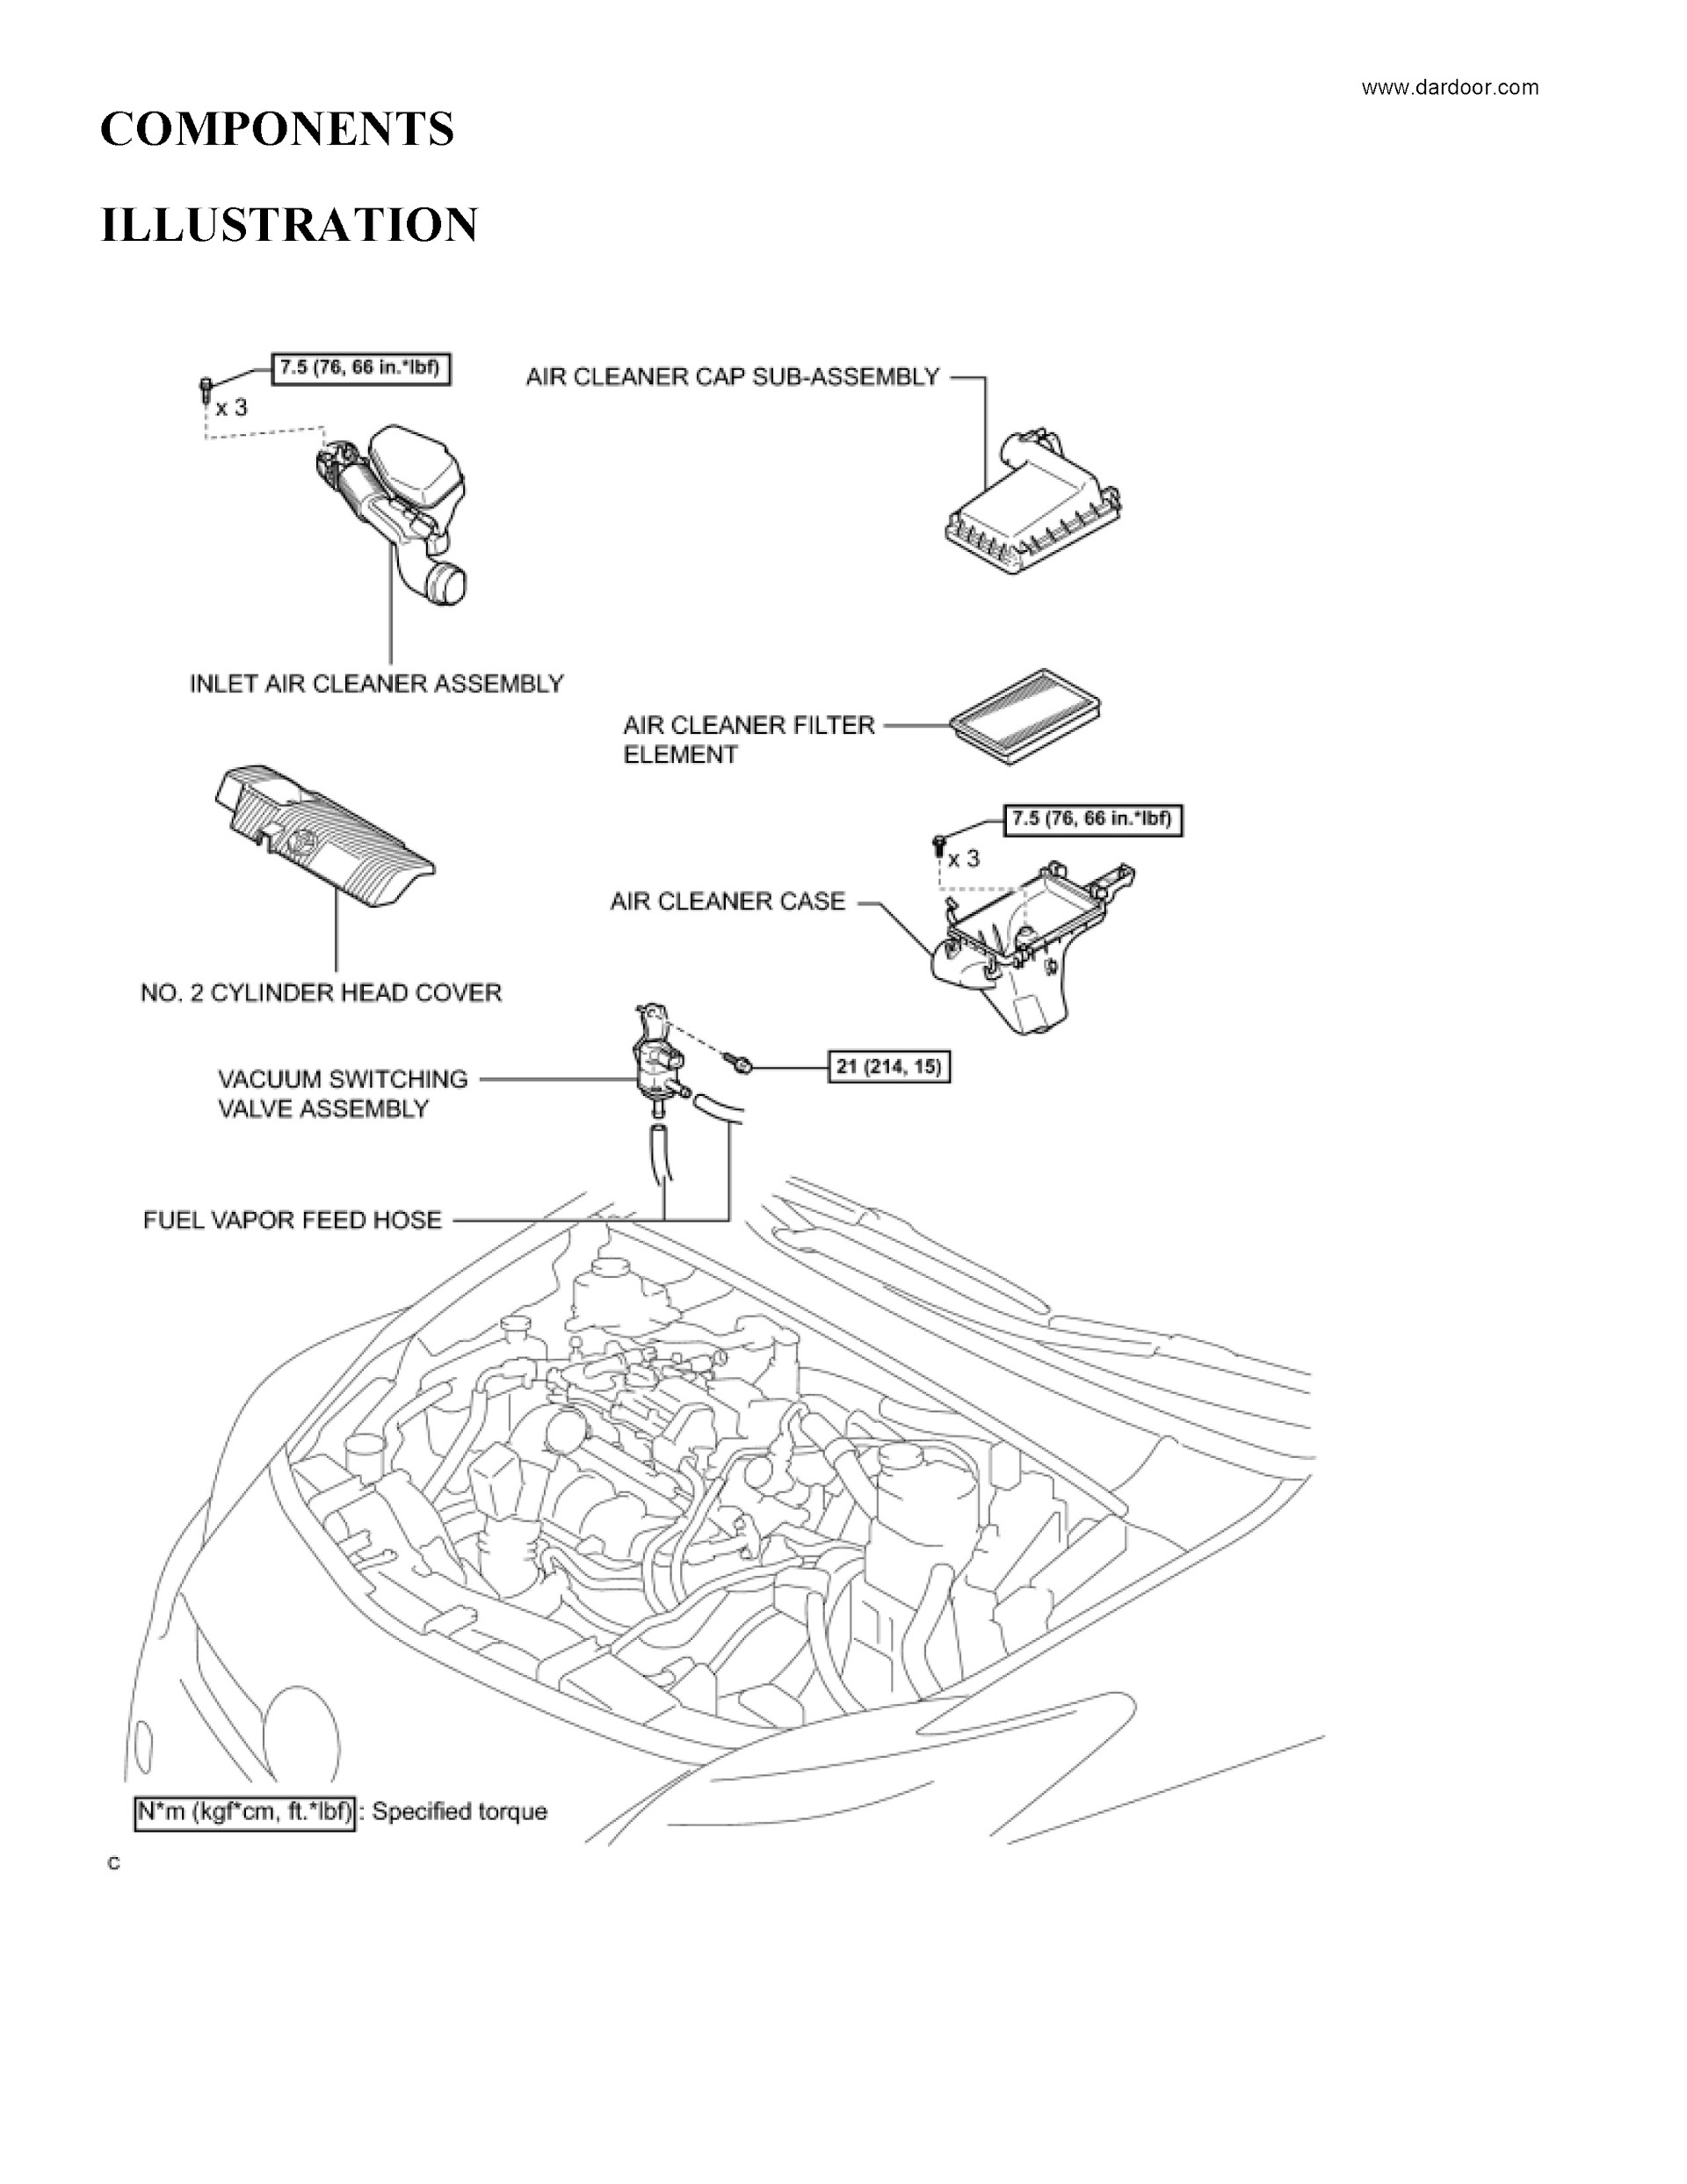 2015 Toyota Prius Hybrid Repair Manual, Vacuum Switching Valve Assembly